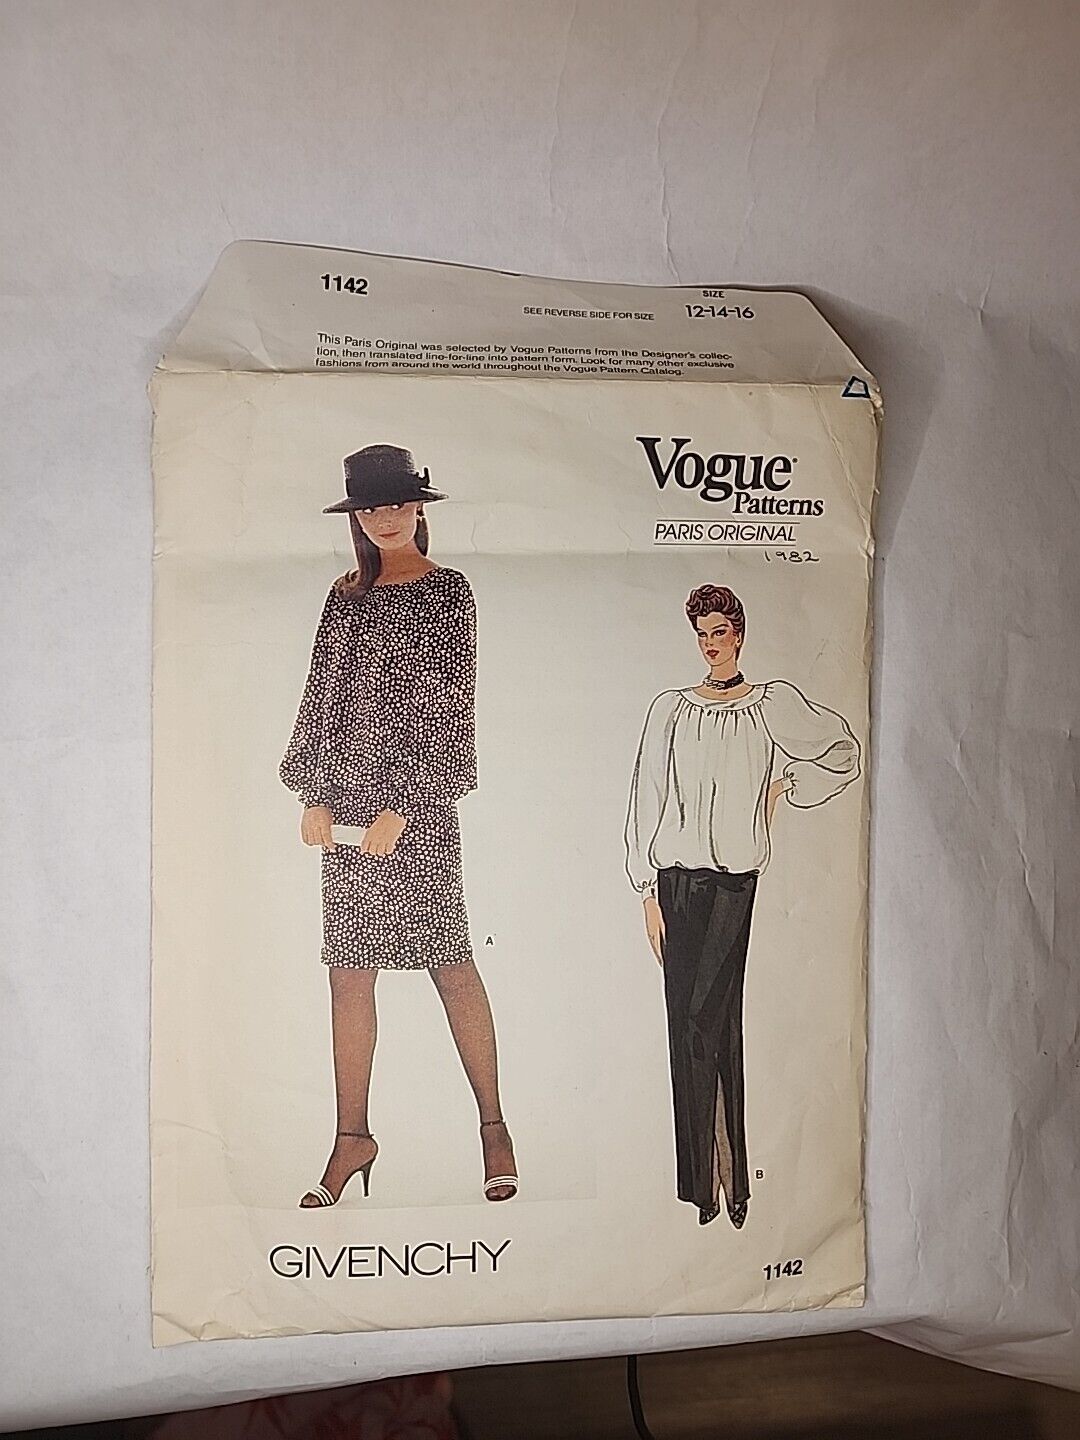 Vintage 1982 Vogue Patterns Paris Original 1142 Top And Skirt By Givenchy UNCUT